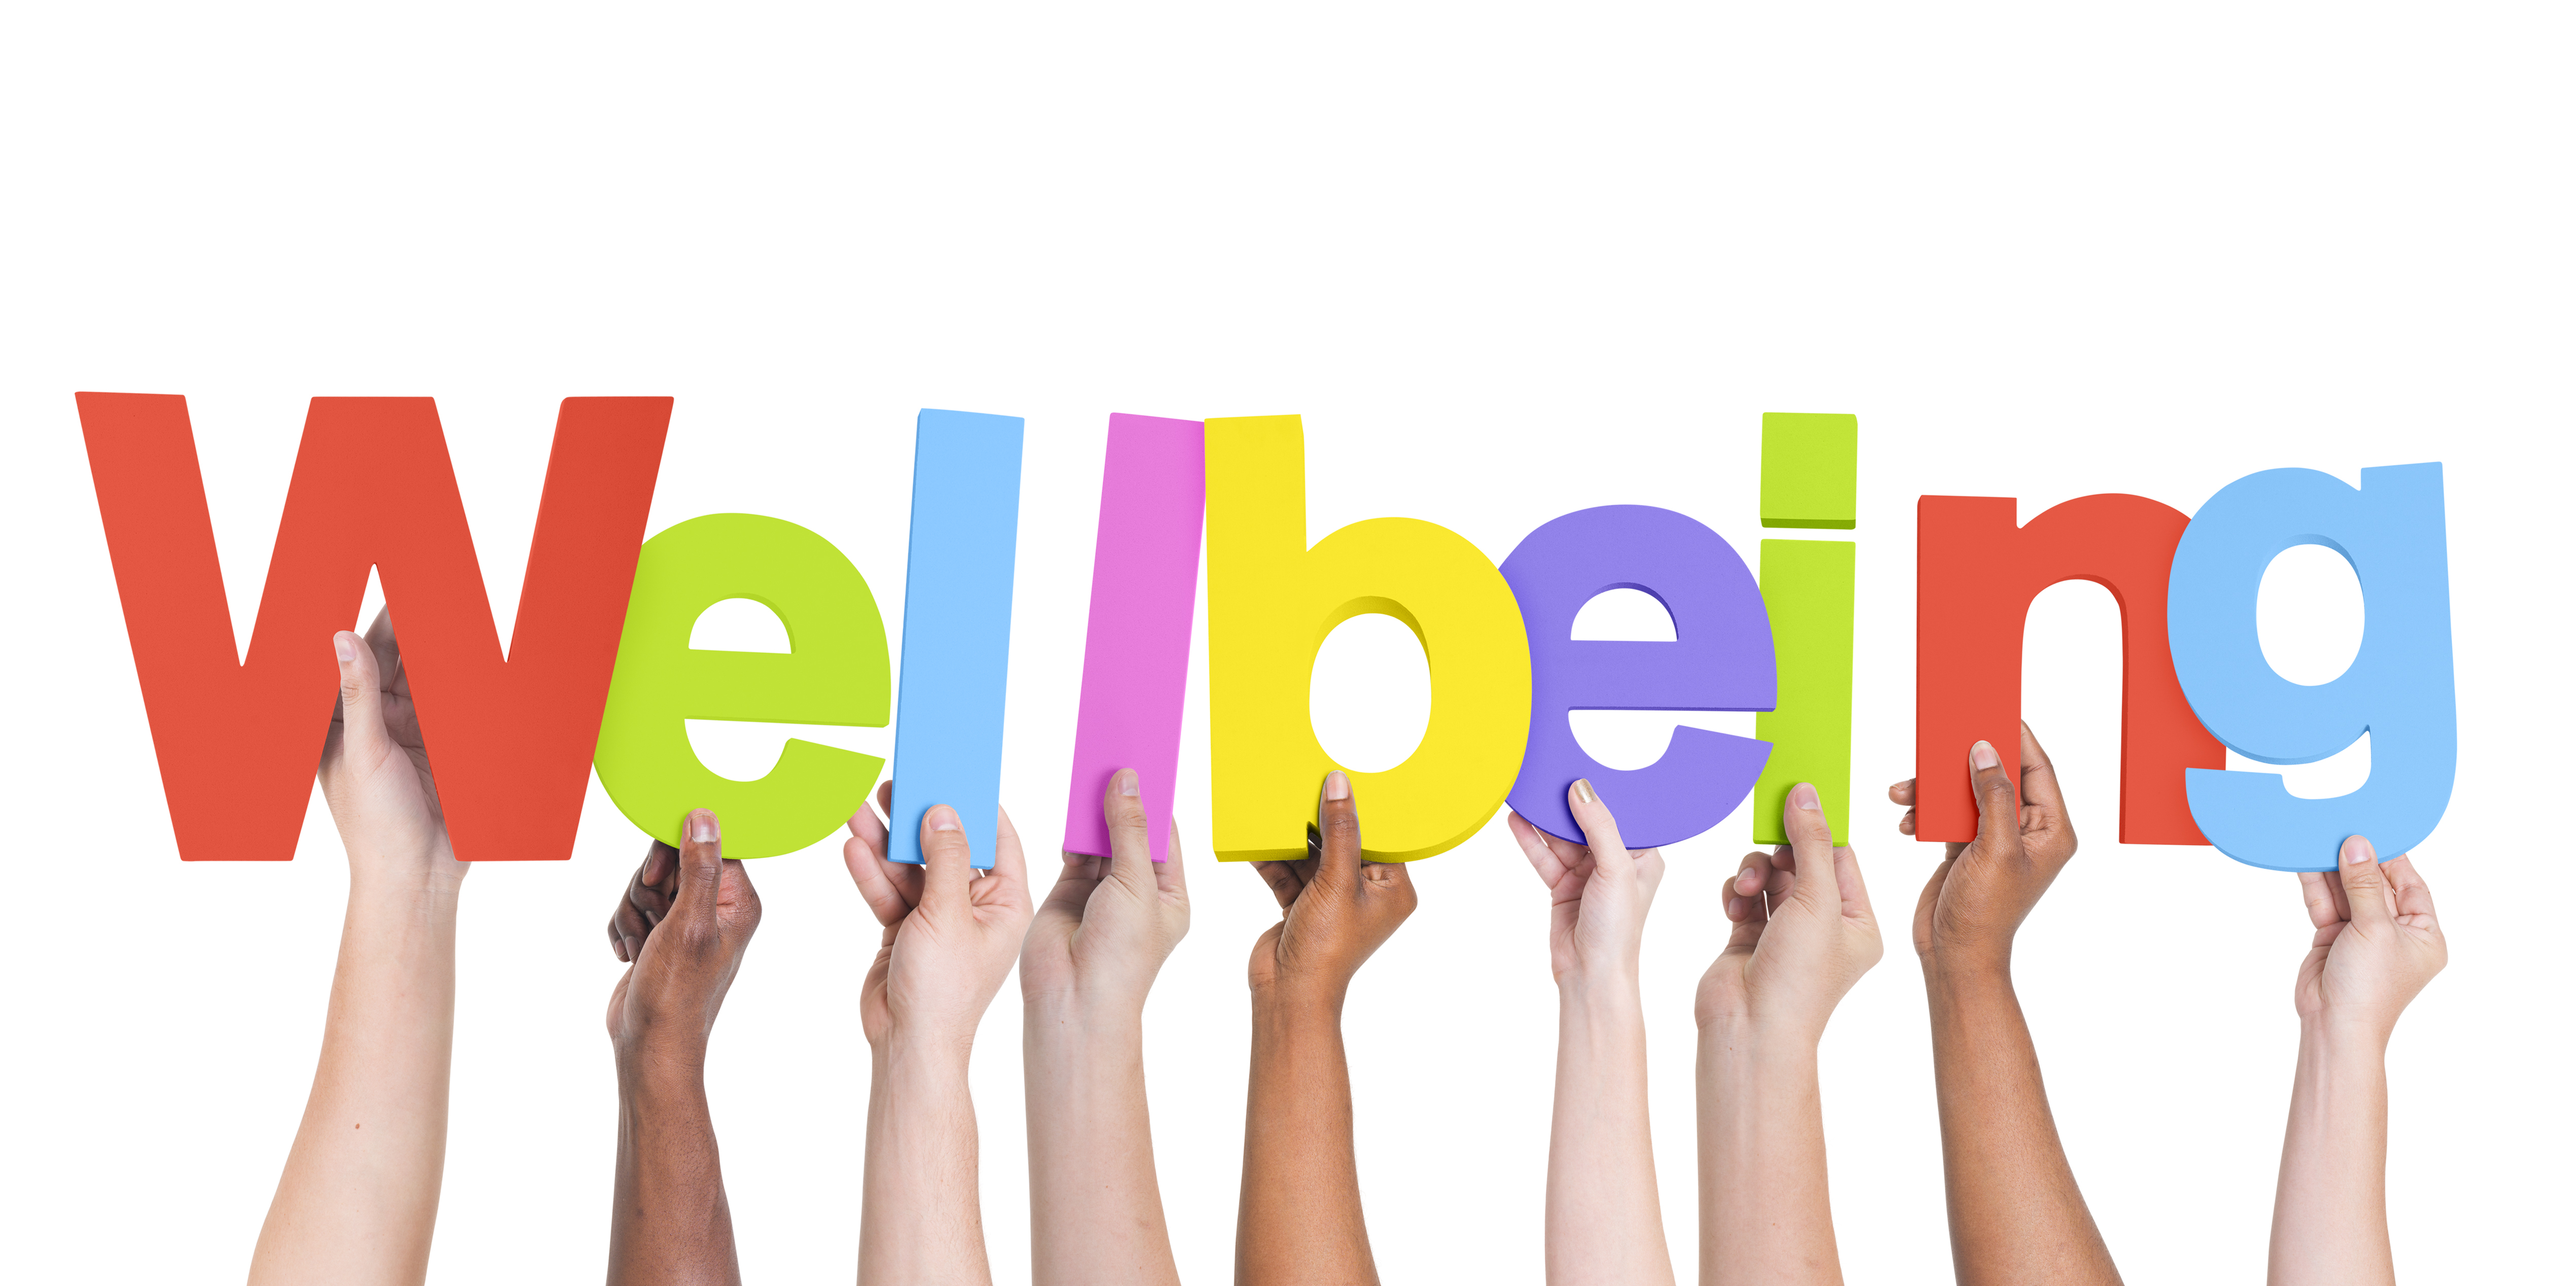 Wellbeing Workshop – July 9th 2015